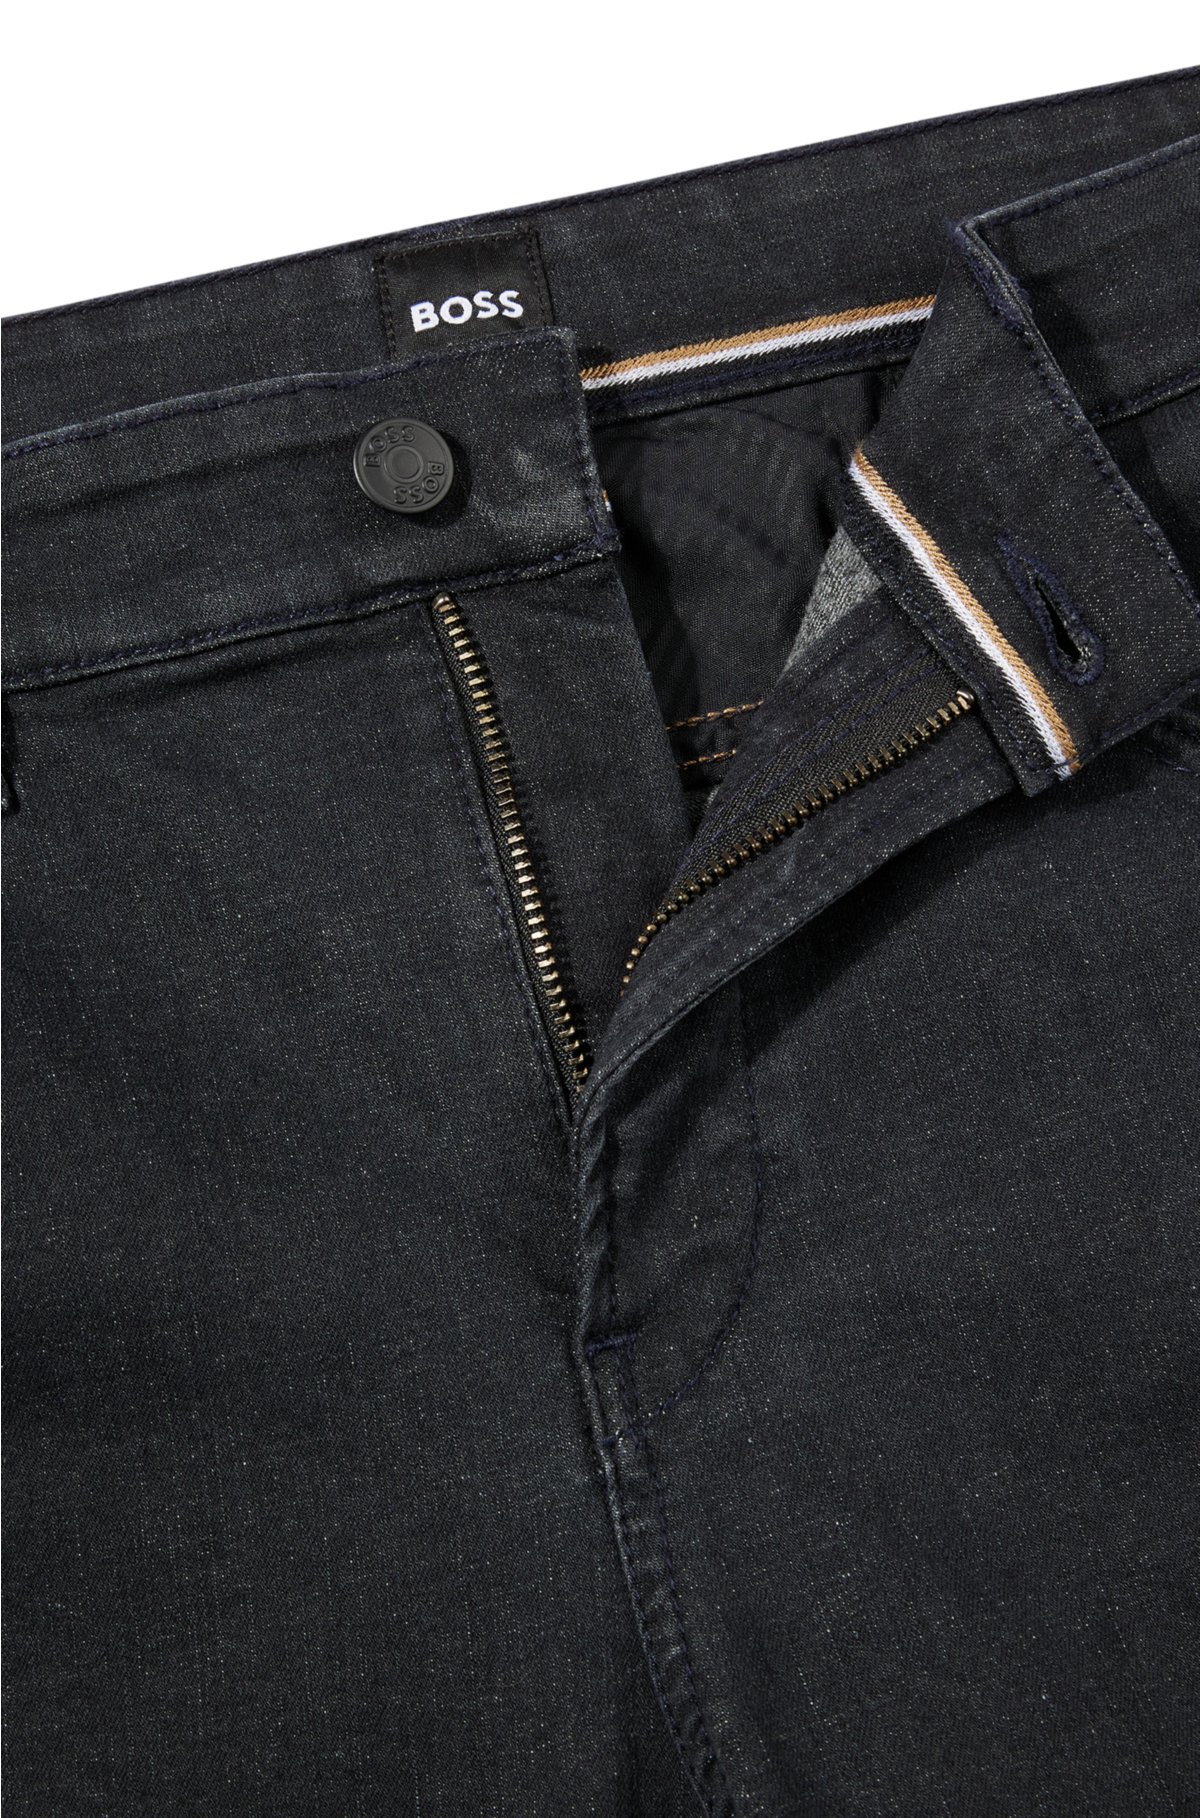 BOSS - Slim-fit jeans in black soft-washed denim